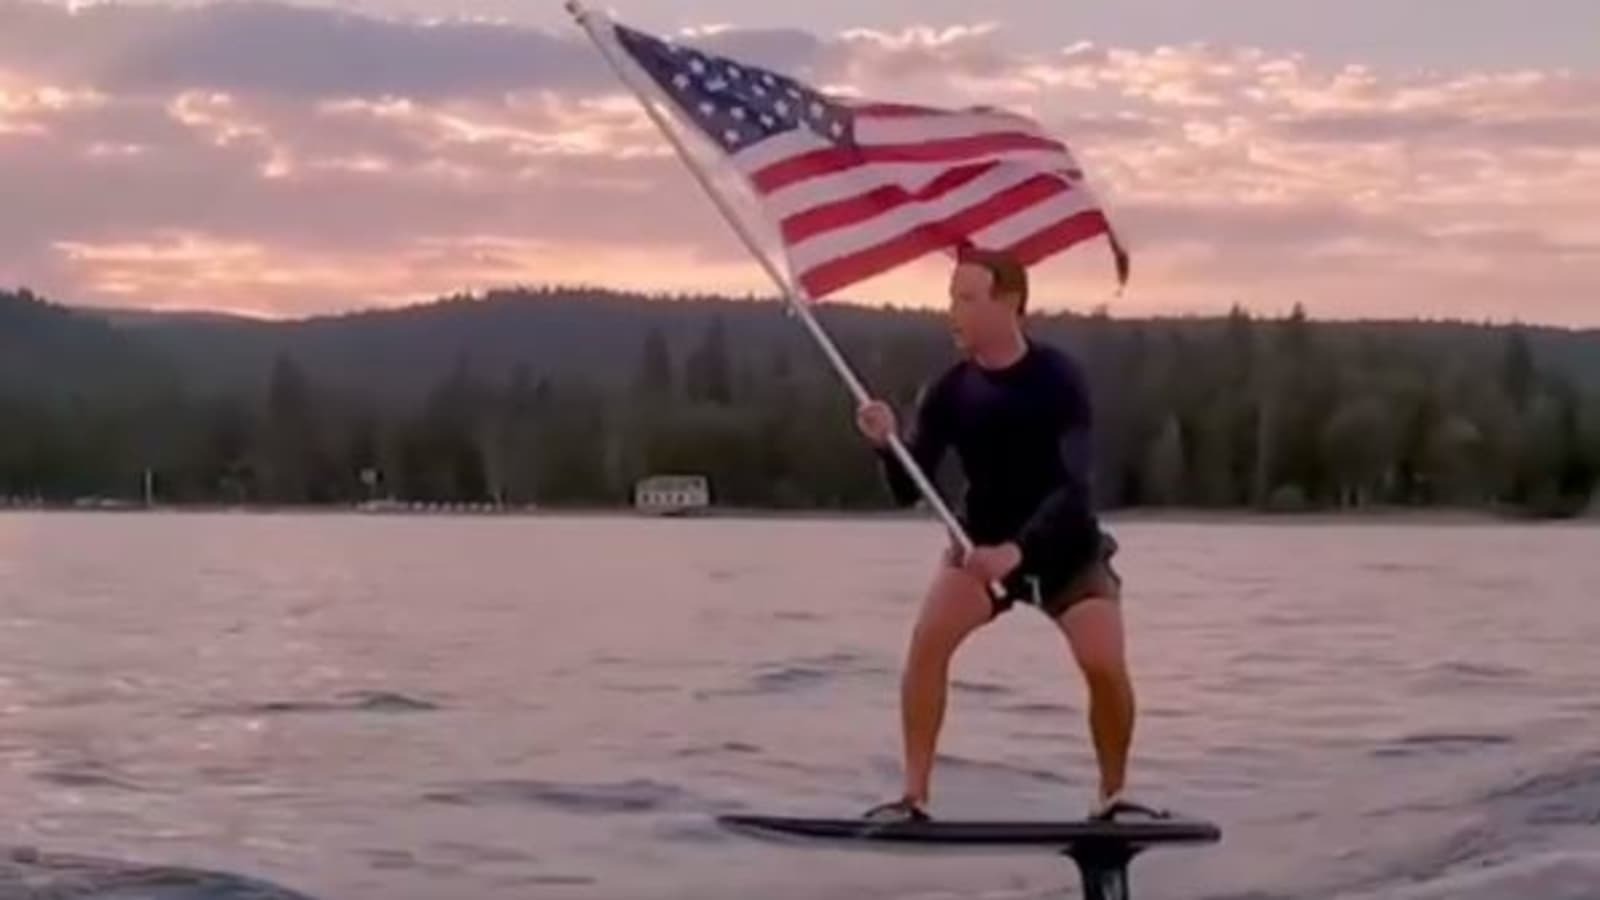 Mark Zuckerberg on his foil surf board waving an American flag